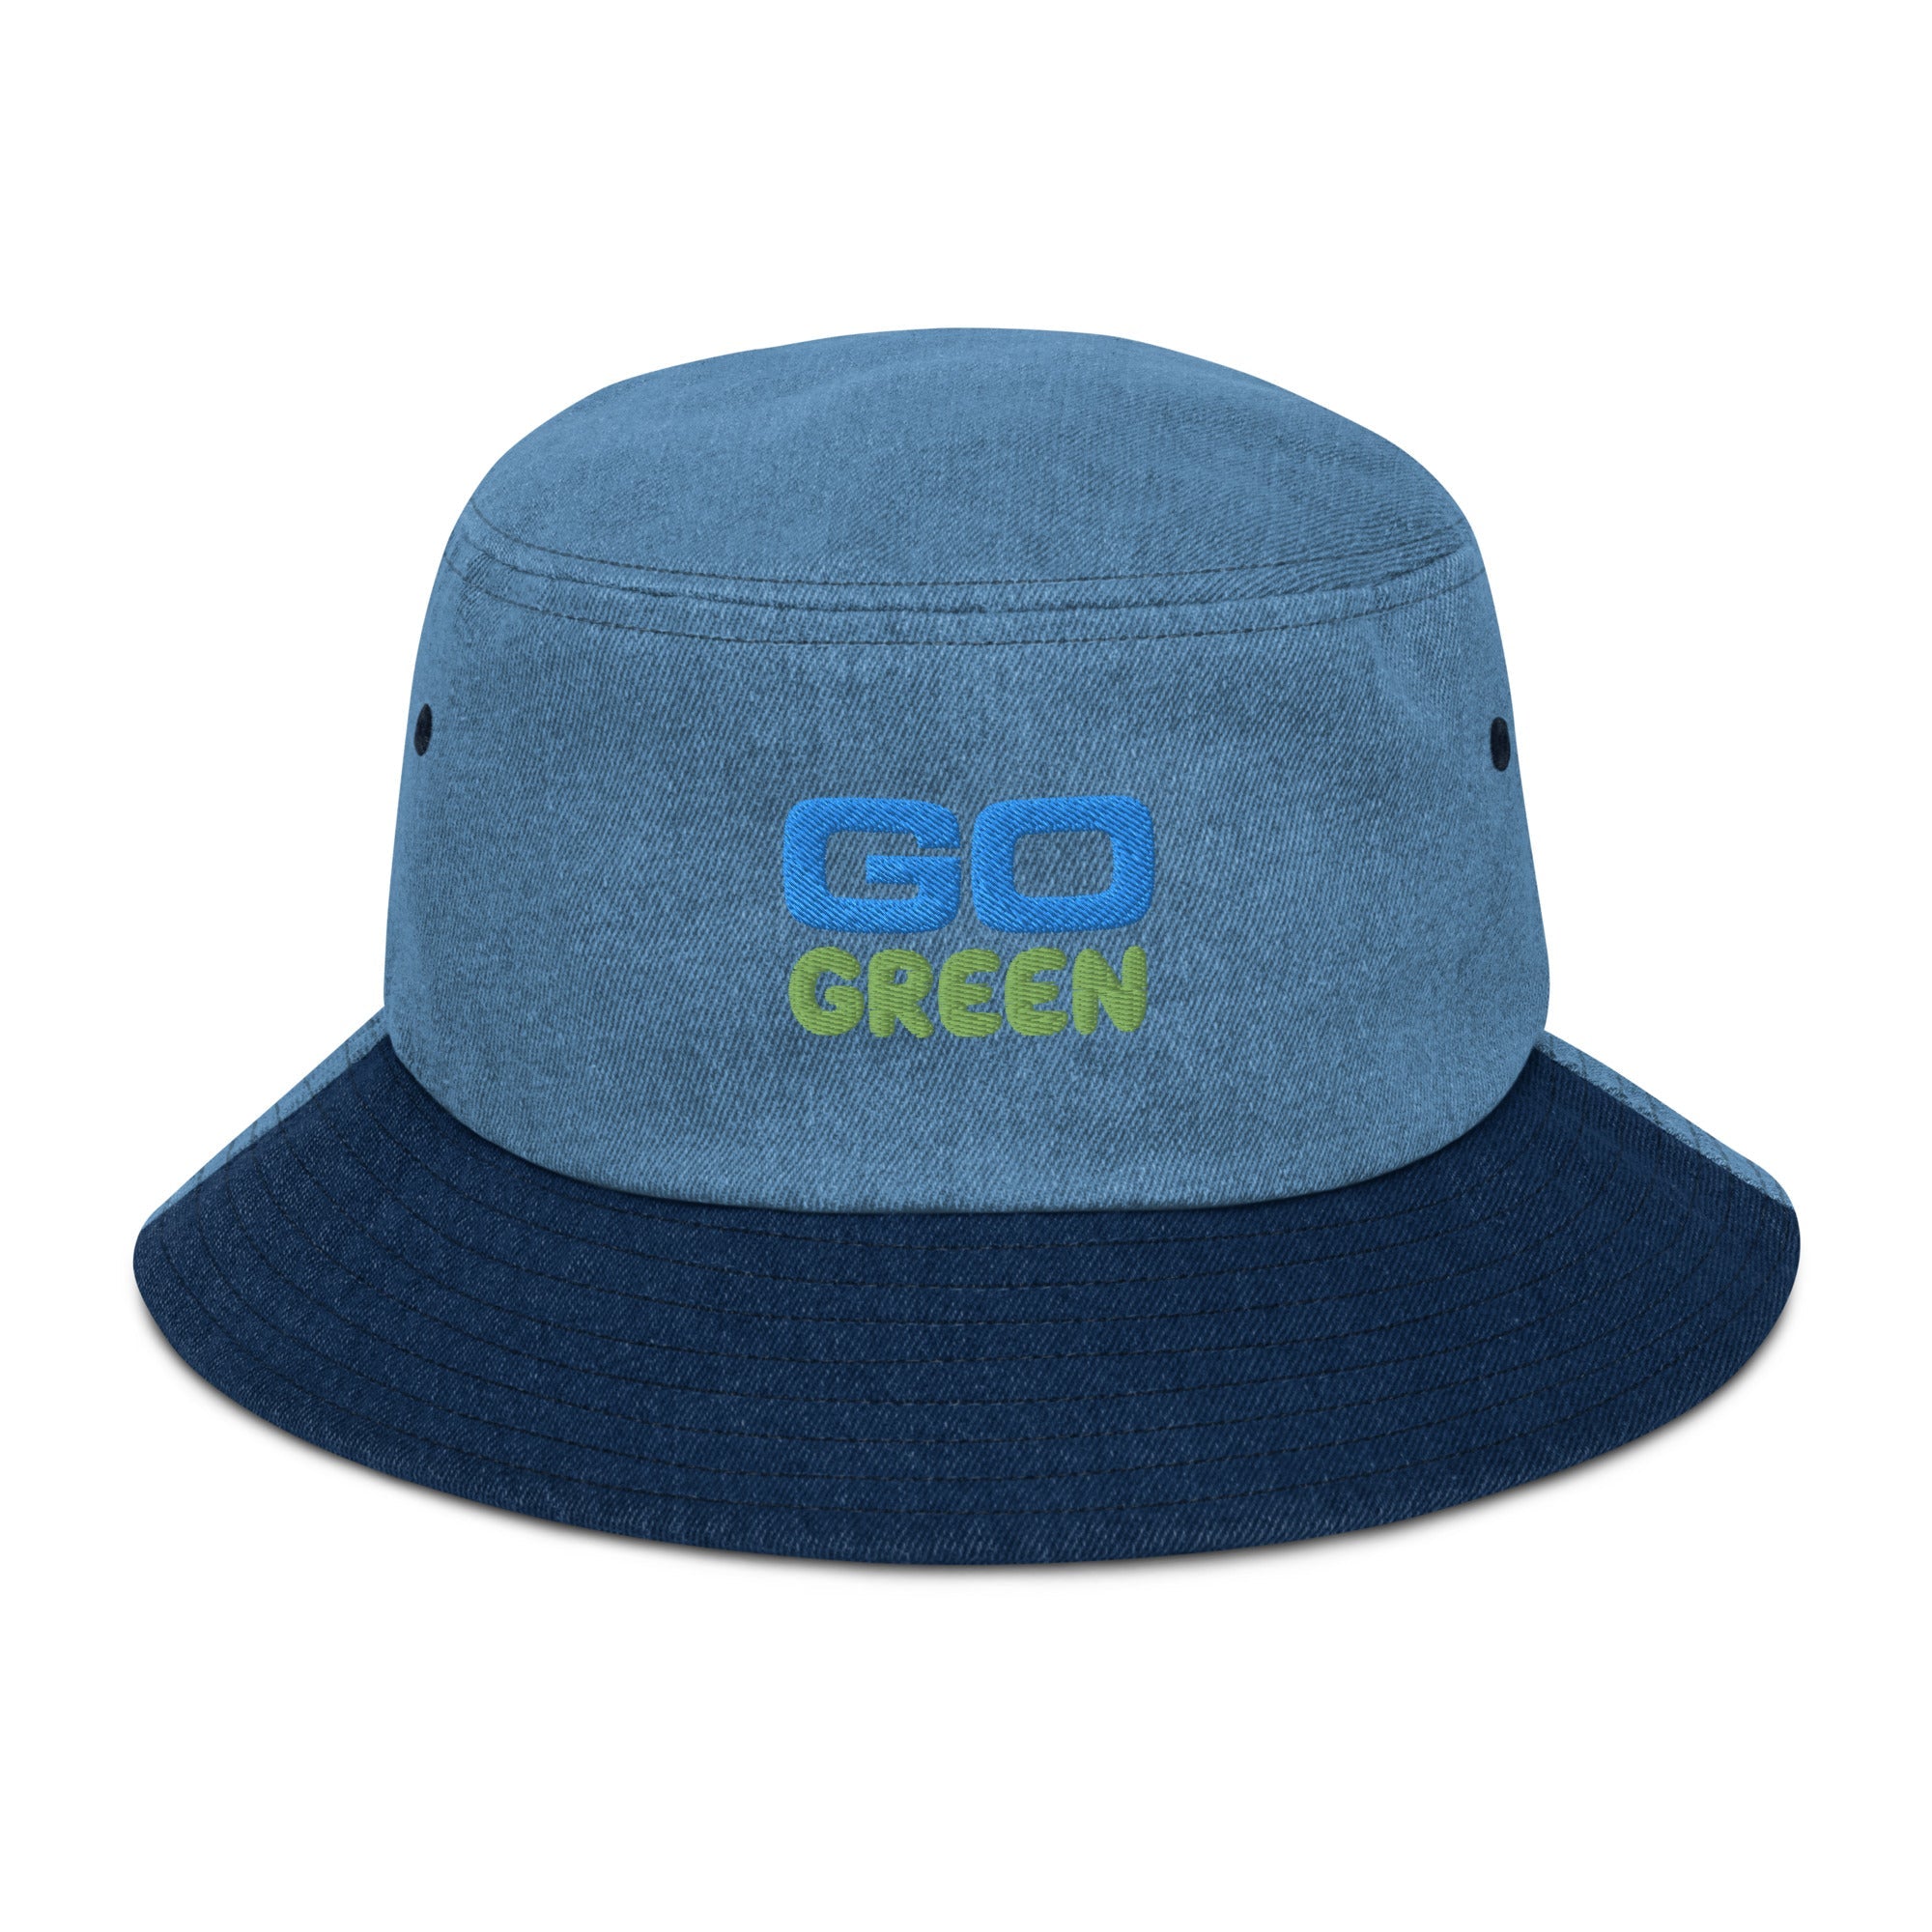 Go Green Denim bucket hat